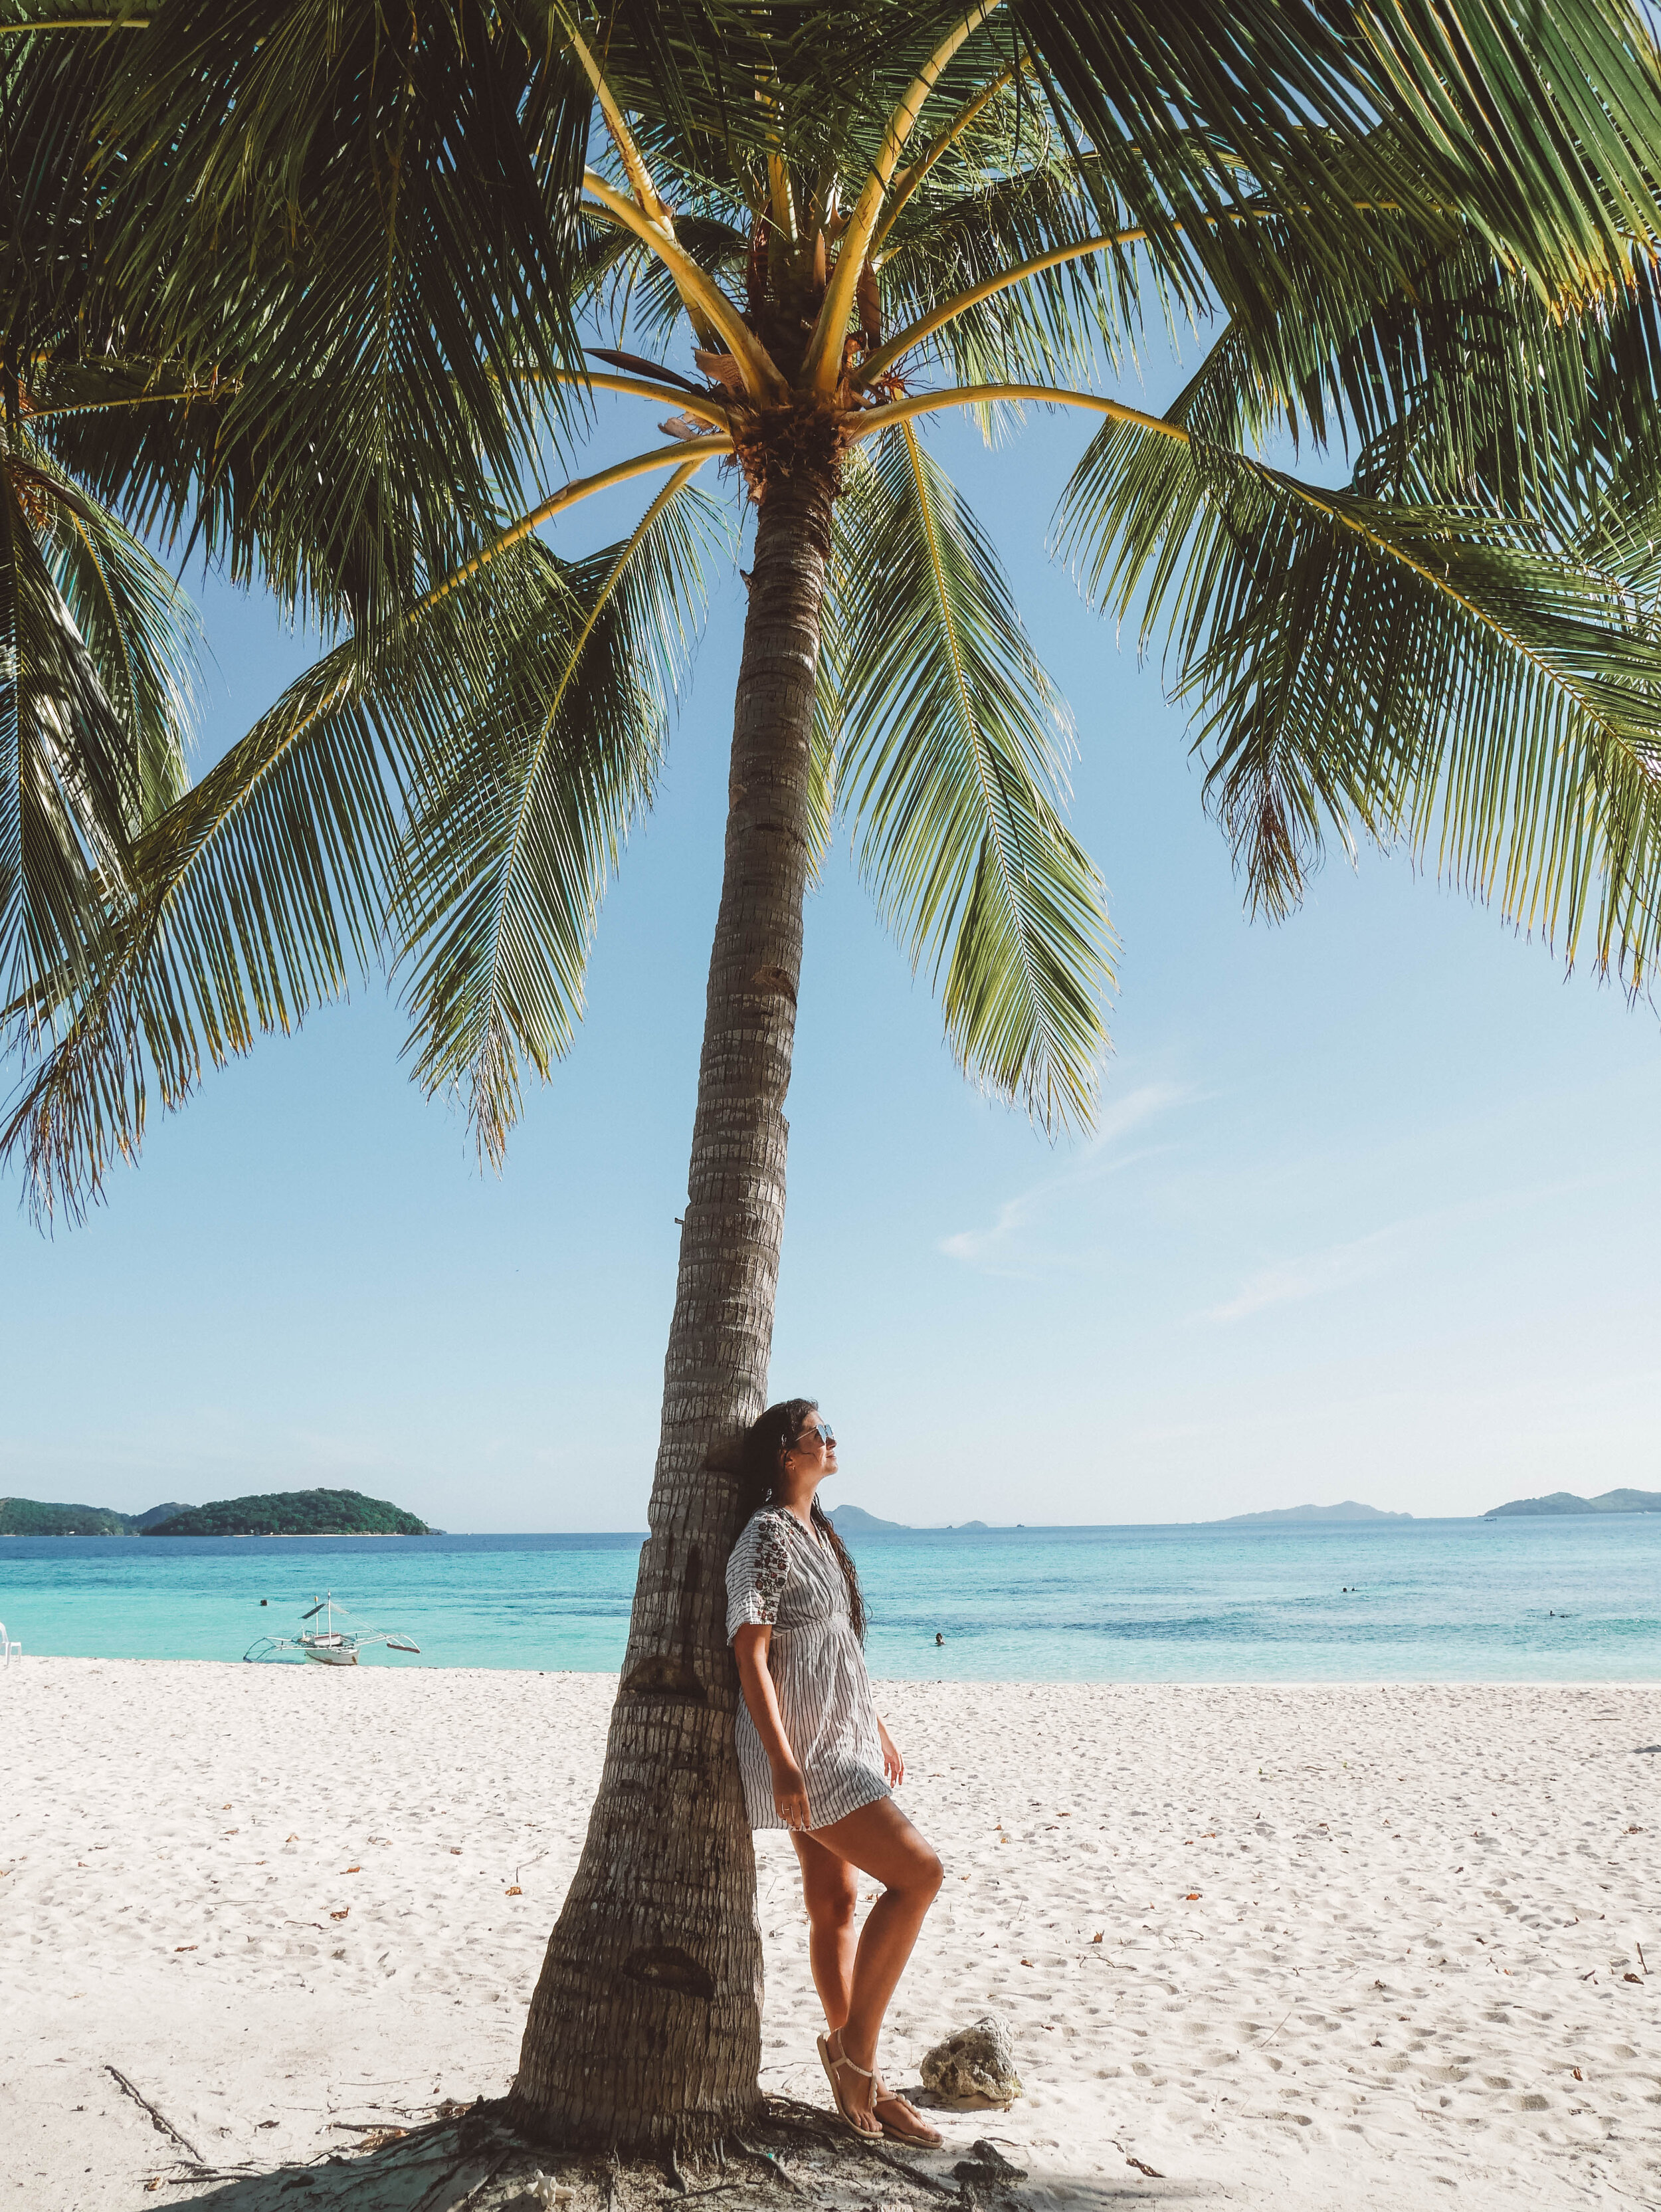 Malapascua Island Palm Tree - Coron - Philippines